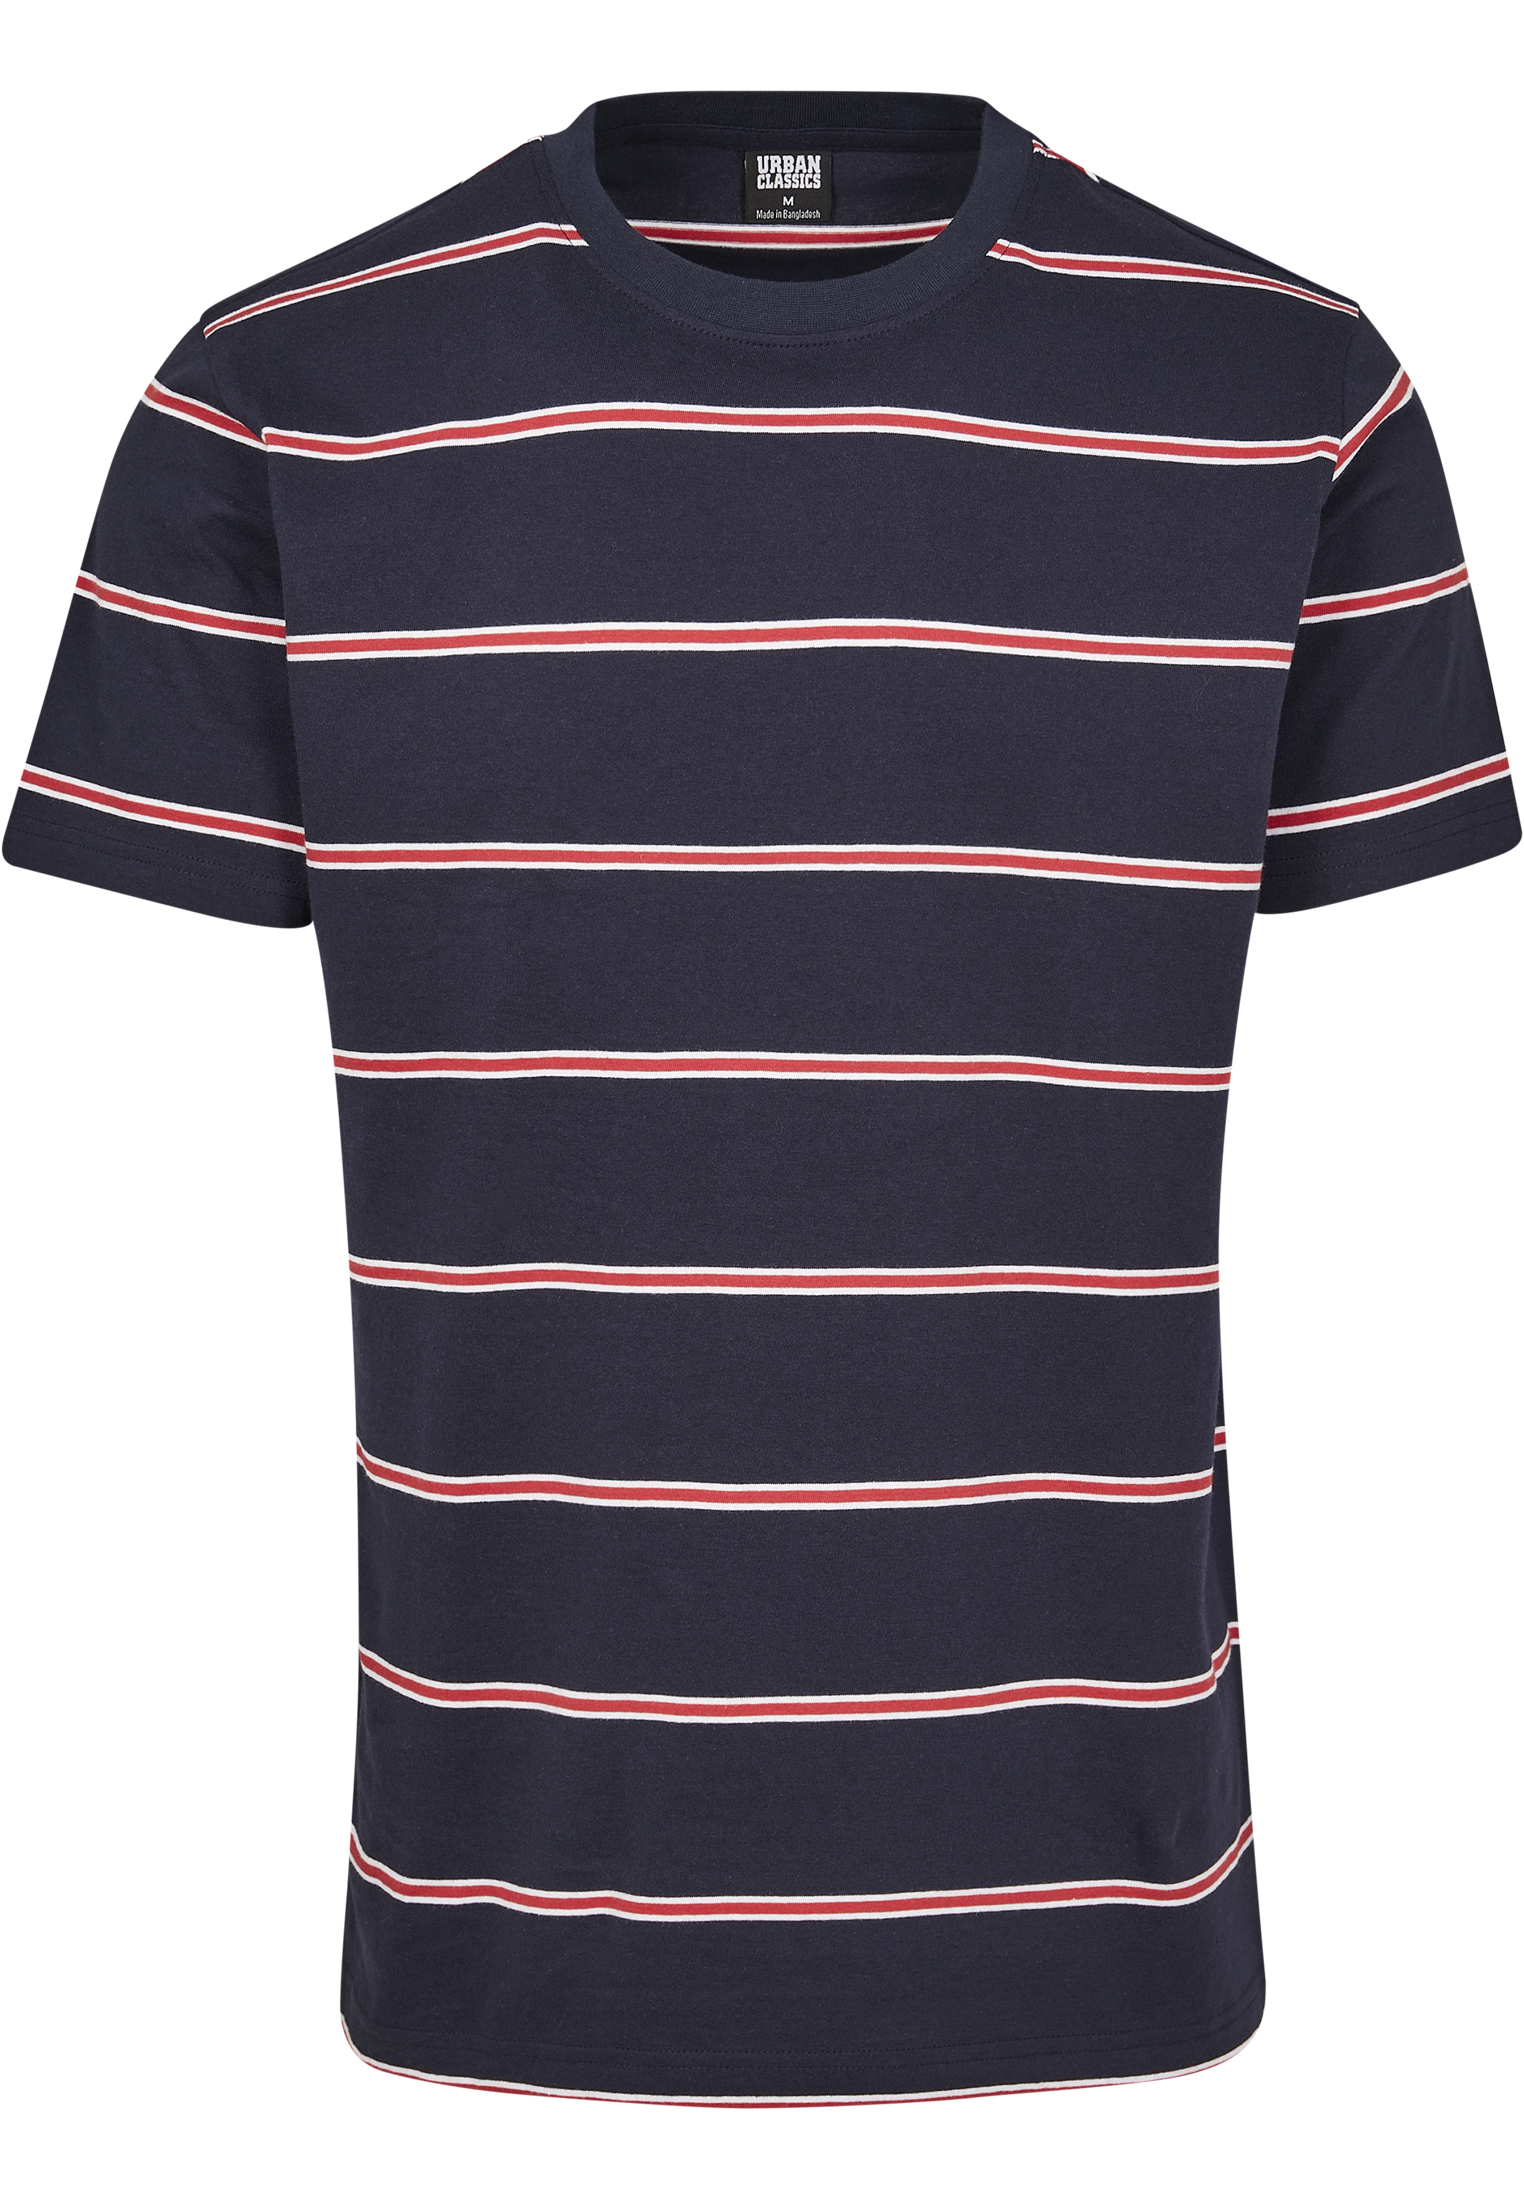 T-Shirts Yarn Dyed Skate Stripe Tee in Farbe midnightnavy/red